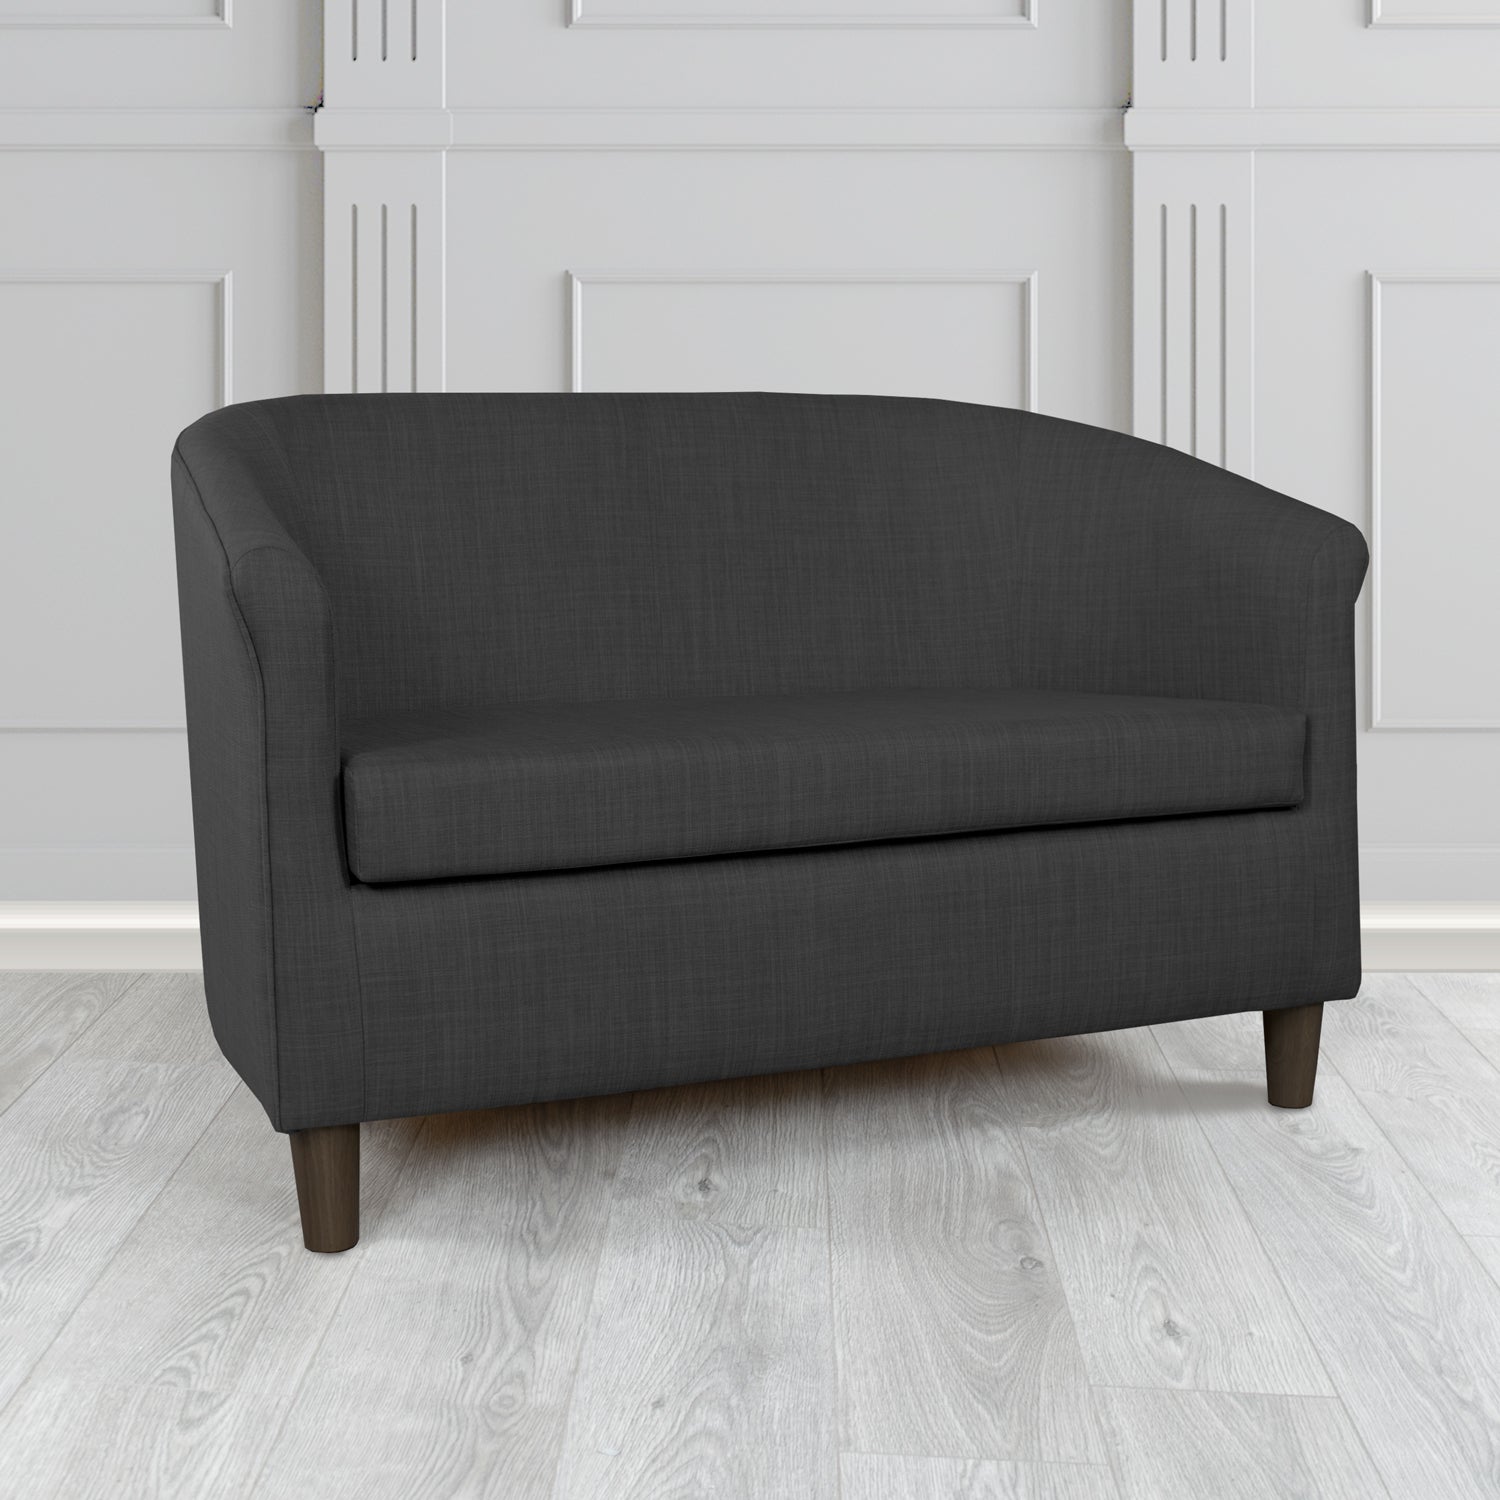 Tuscany Charles Ebony Plain Linen Fabric 2 Seater Tub Sofa - The Tub Chair Shop